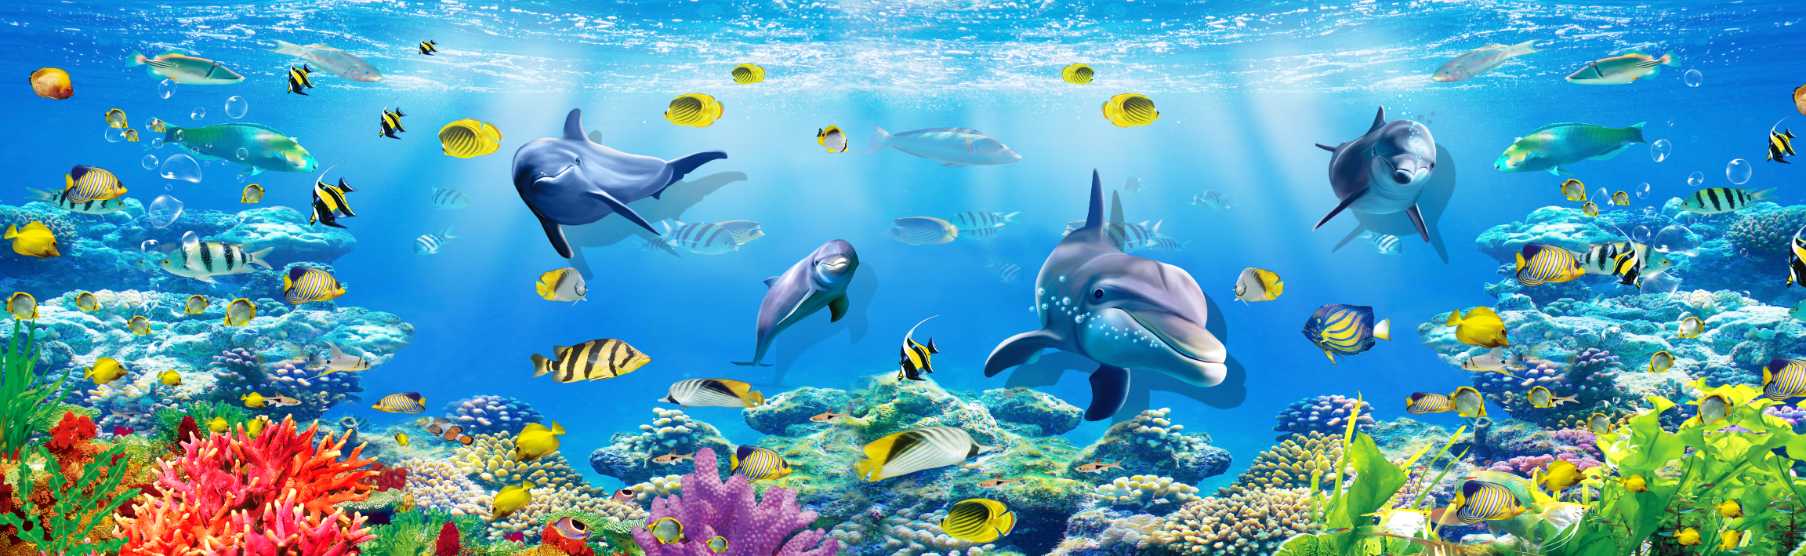 Underwater Scenery Wallpaper Print